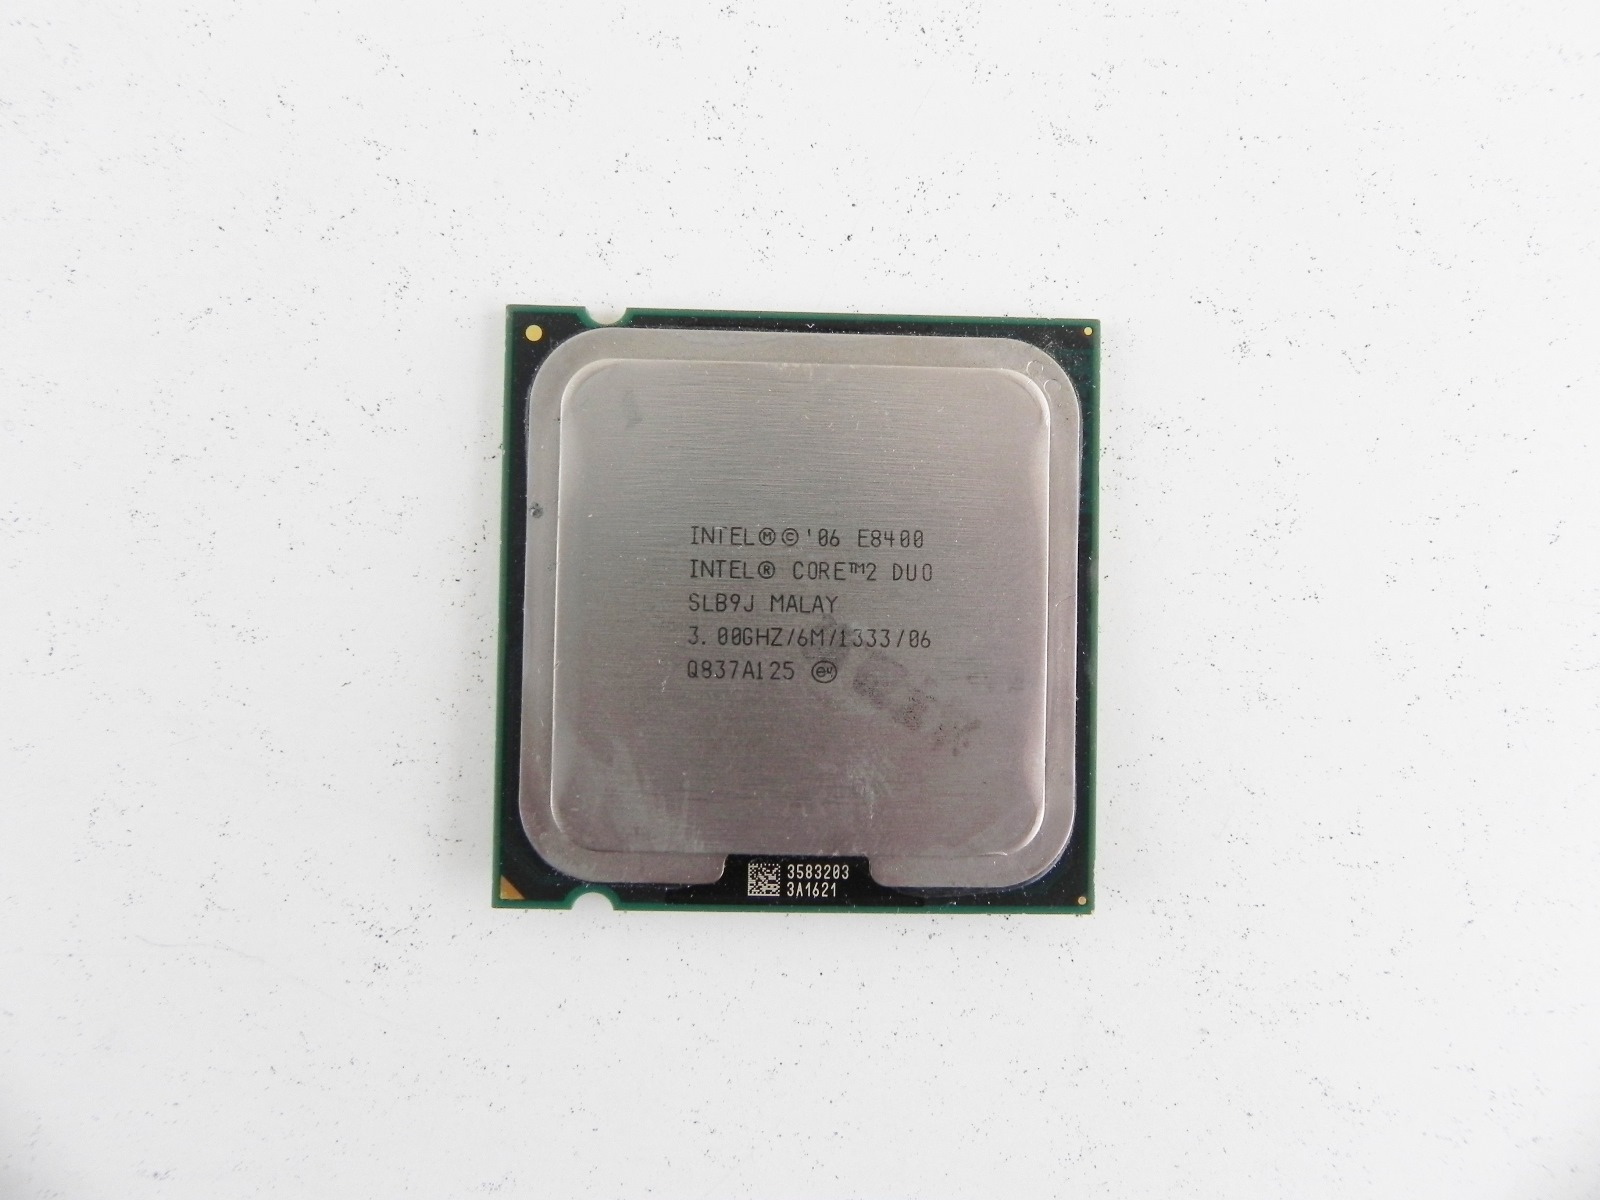 Pentium r Dual-Core CPU e5700. Intel Core 2 Duo e8400 lga775, 2 x 3000 МГЦ. Процессор Intel Core 2 Duo. Intel Core 2 Duo e3600. 2 ядра частота 2 ггц